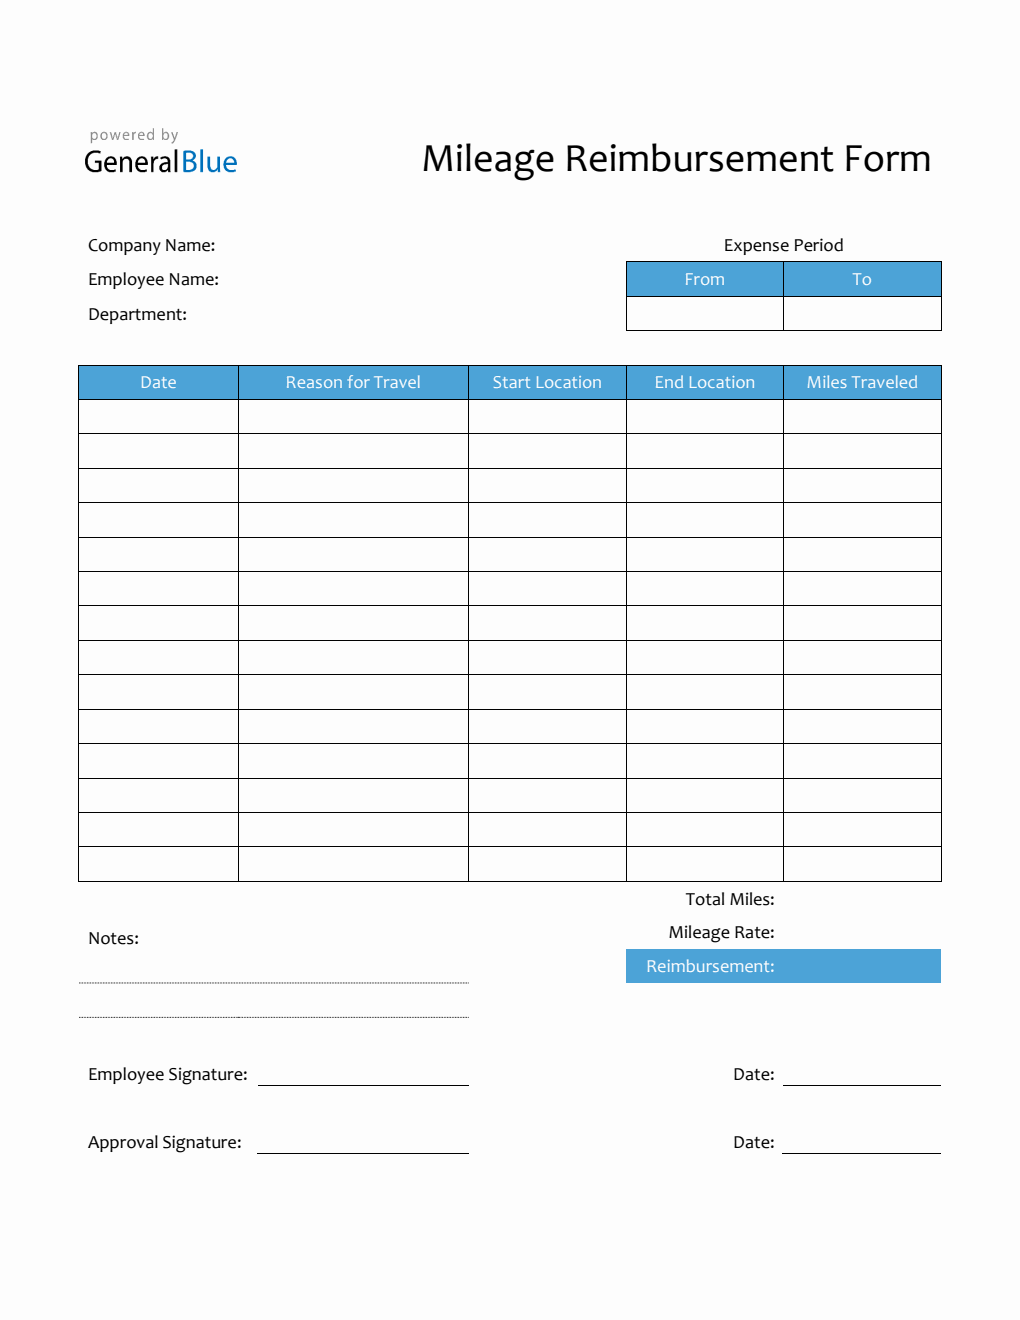 Mileage Reimbursement Form in PDF (Blue)